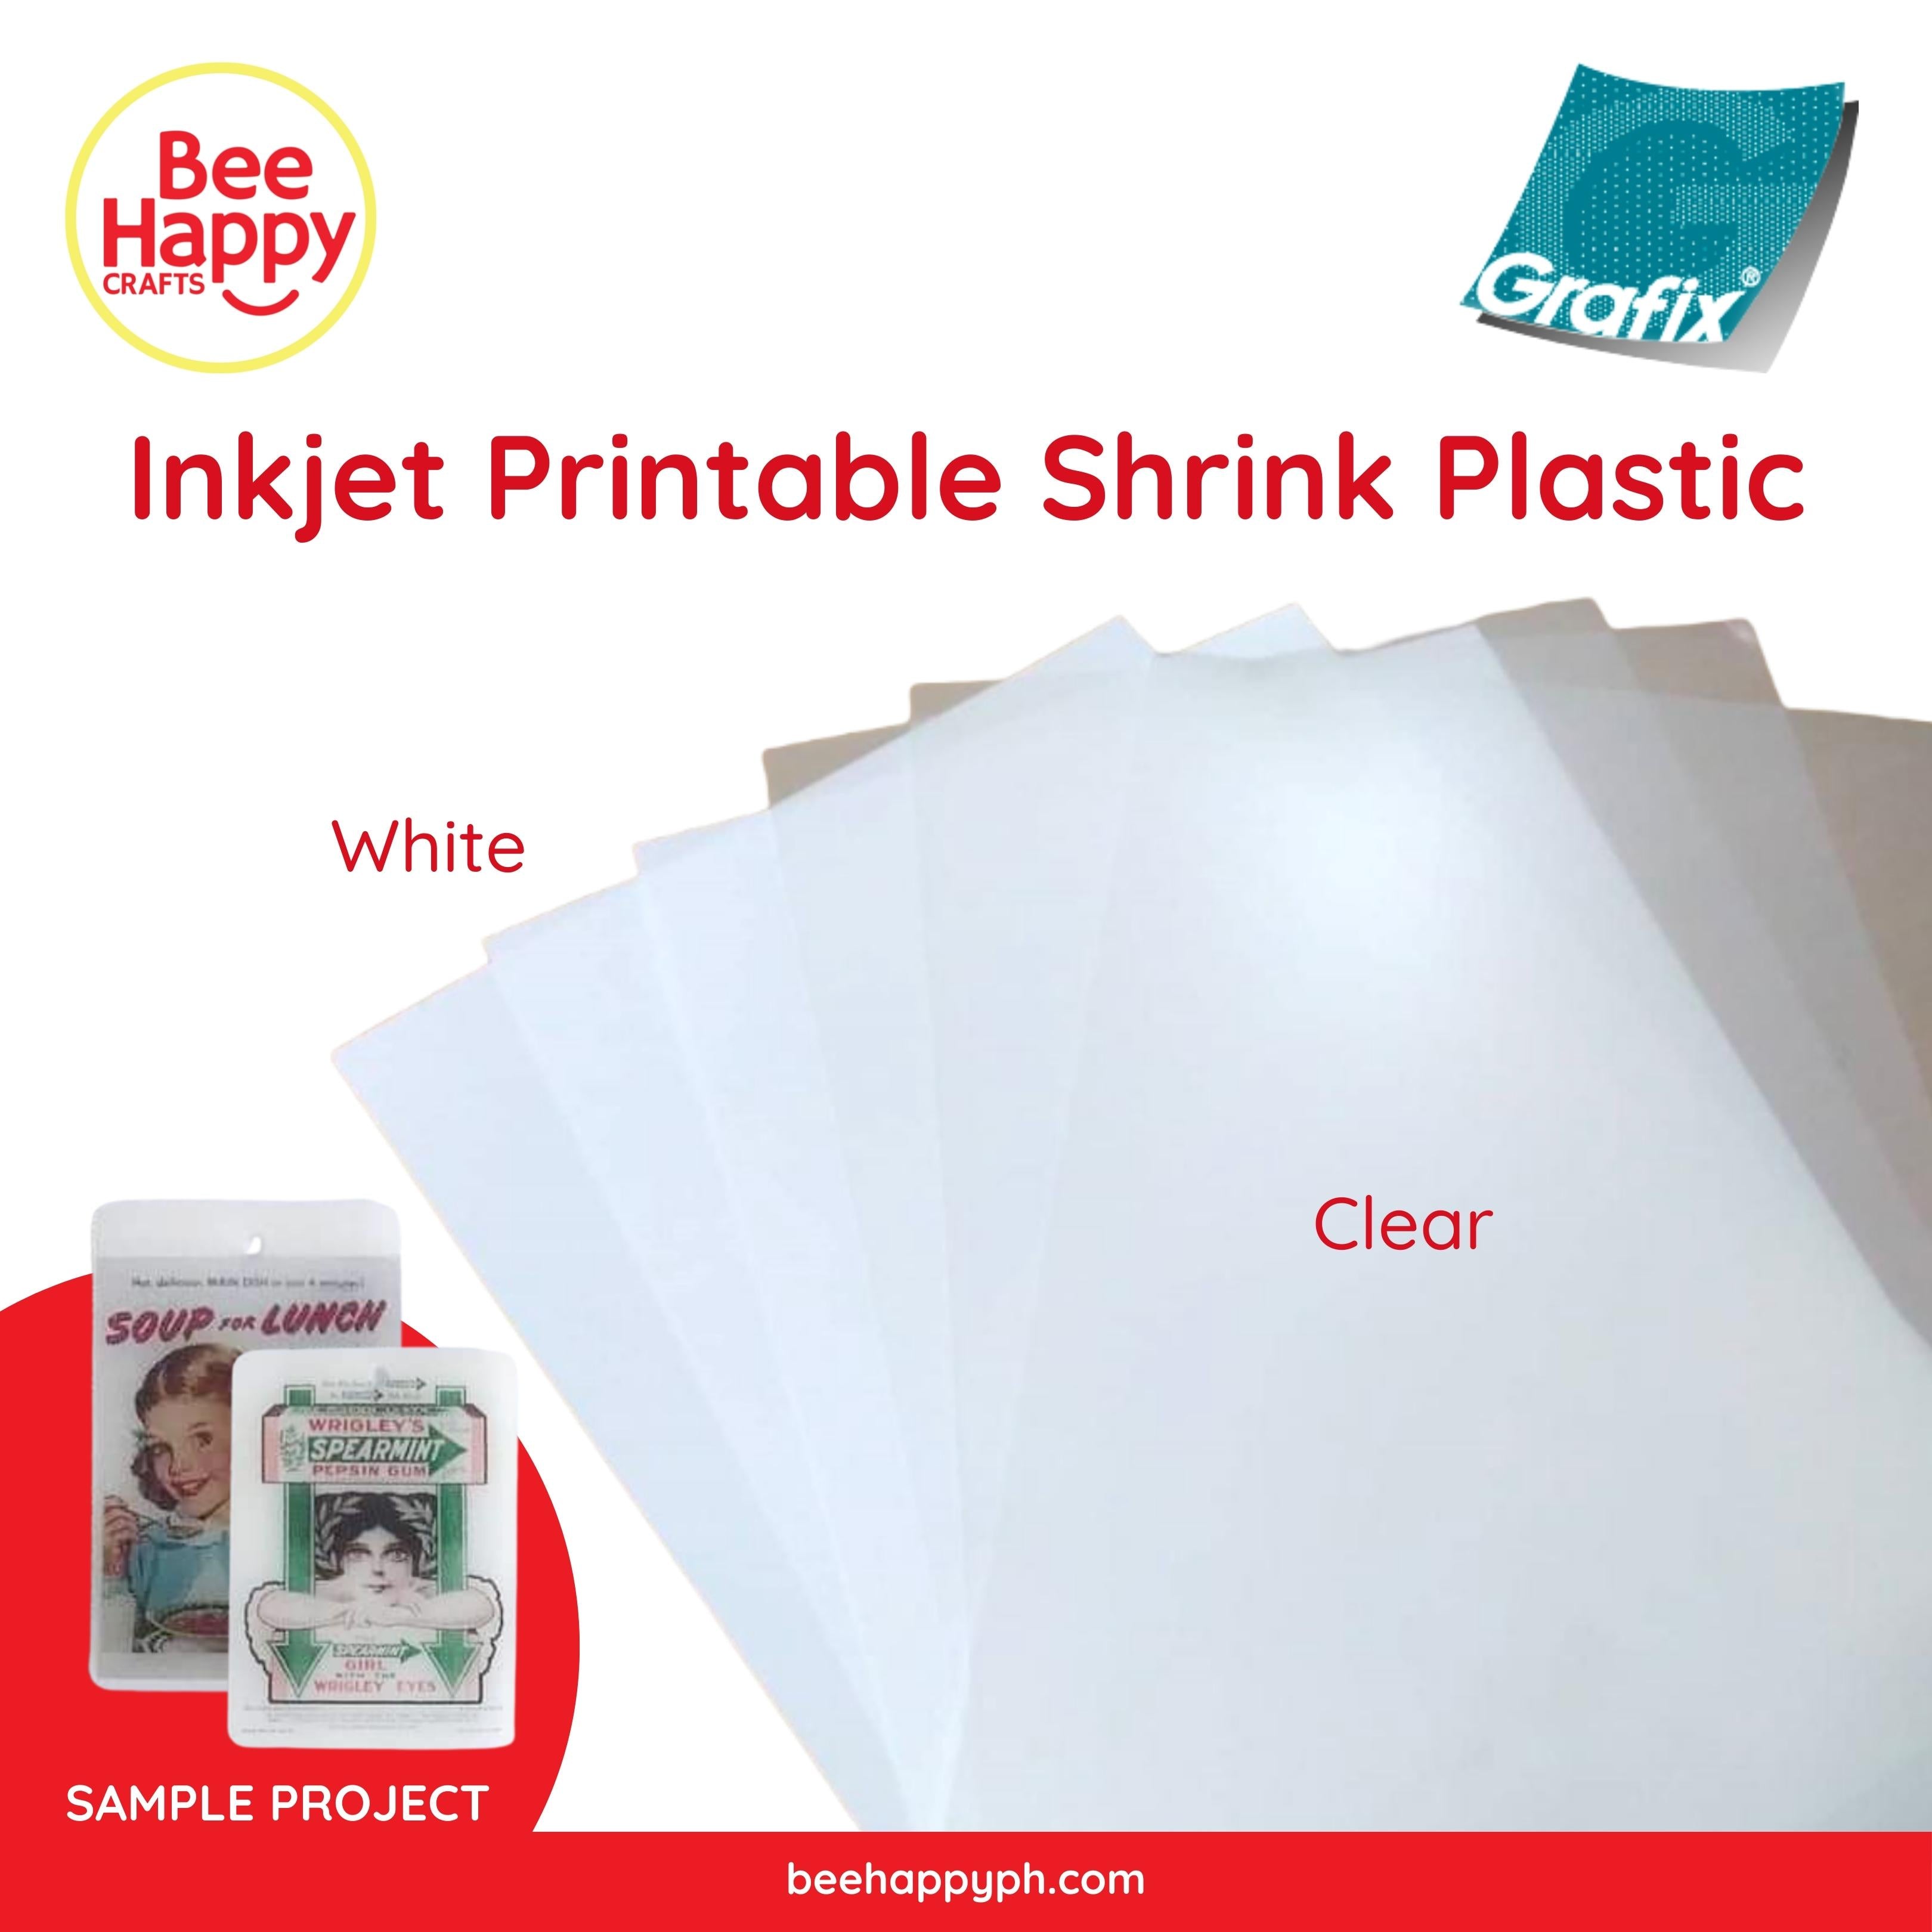 Shrink Plastic Inkjet Printable 8.5 x 11 Size